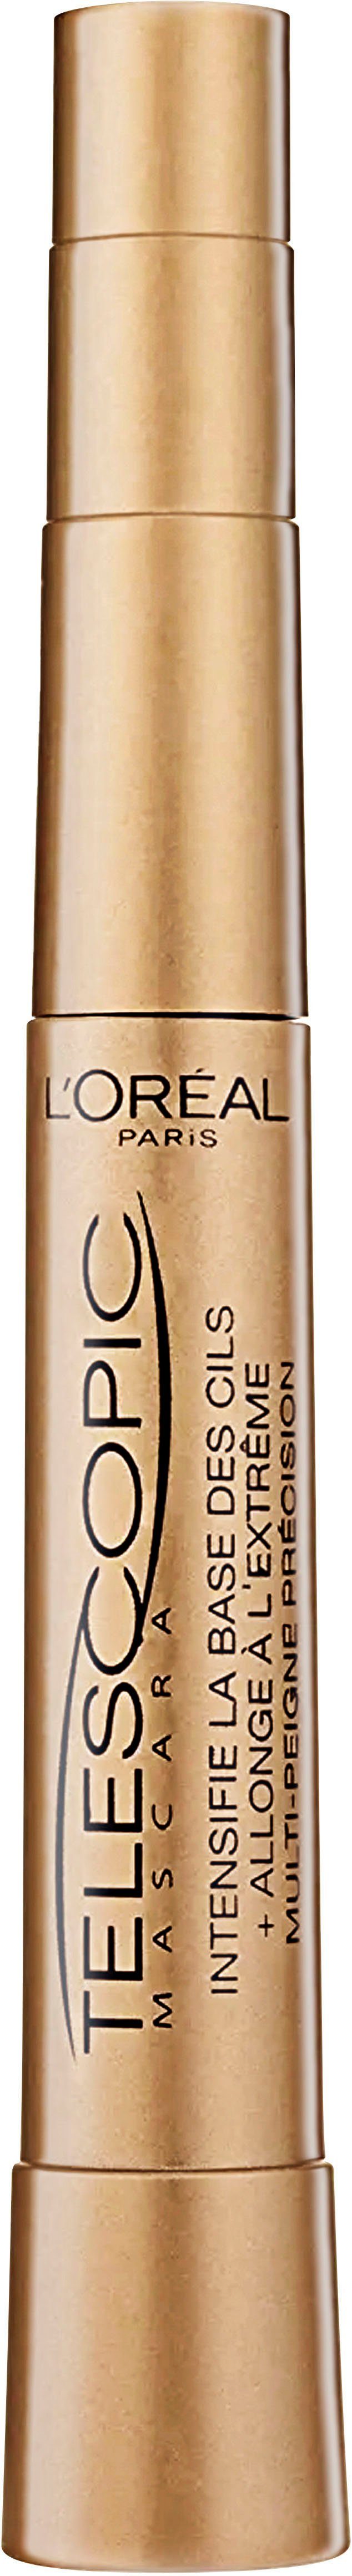 L'ORÉAL PARIS Mascara L'Oréal Paris False Lash Telescopic Gold Mascara | Mascara